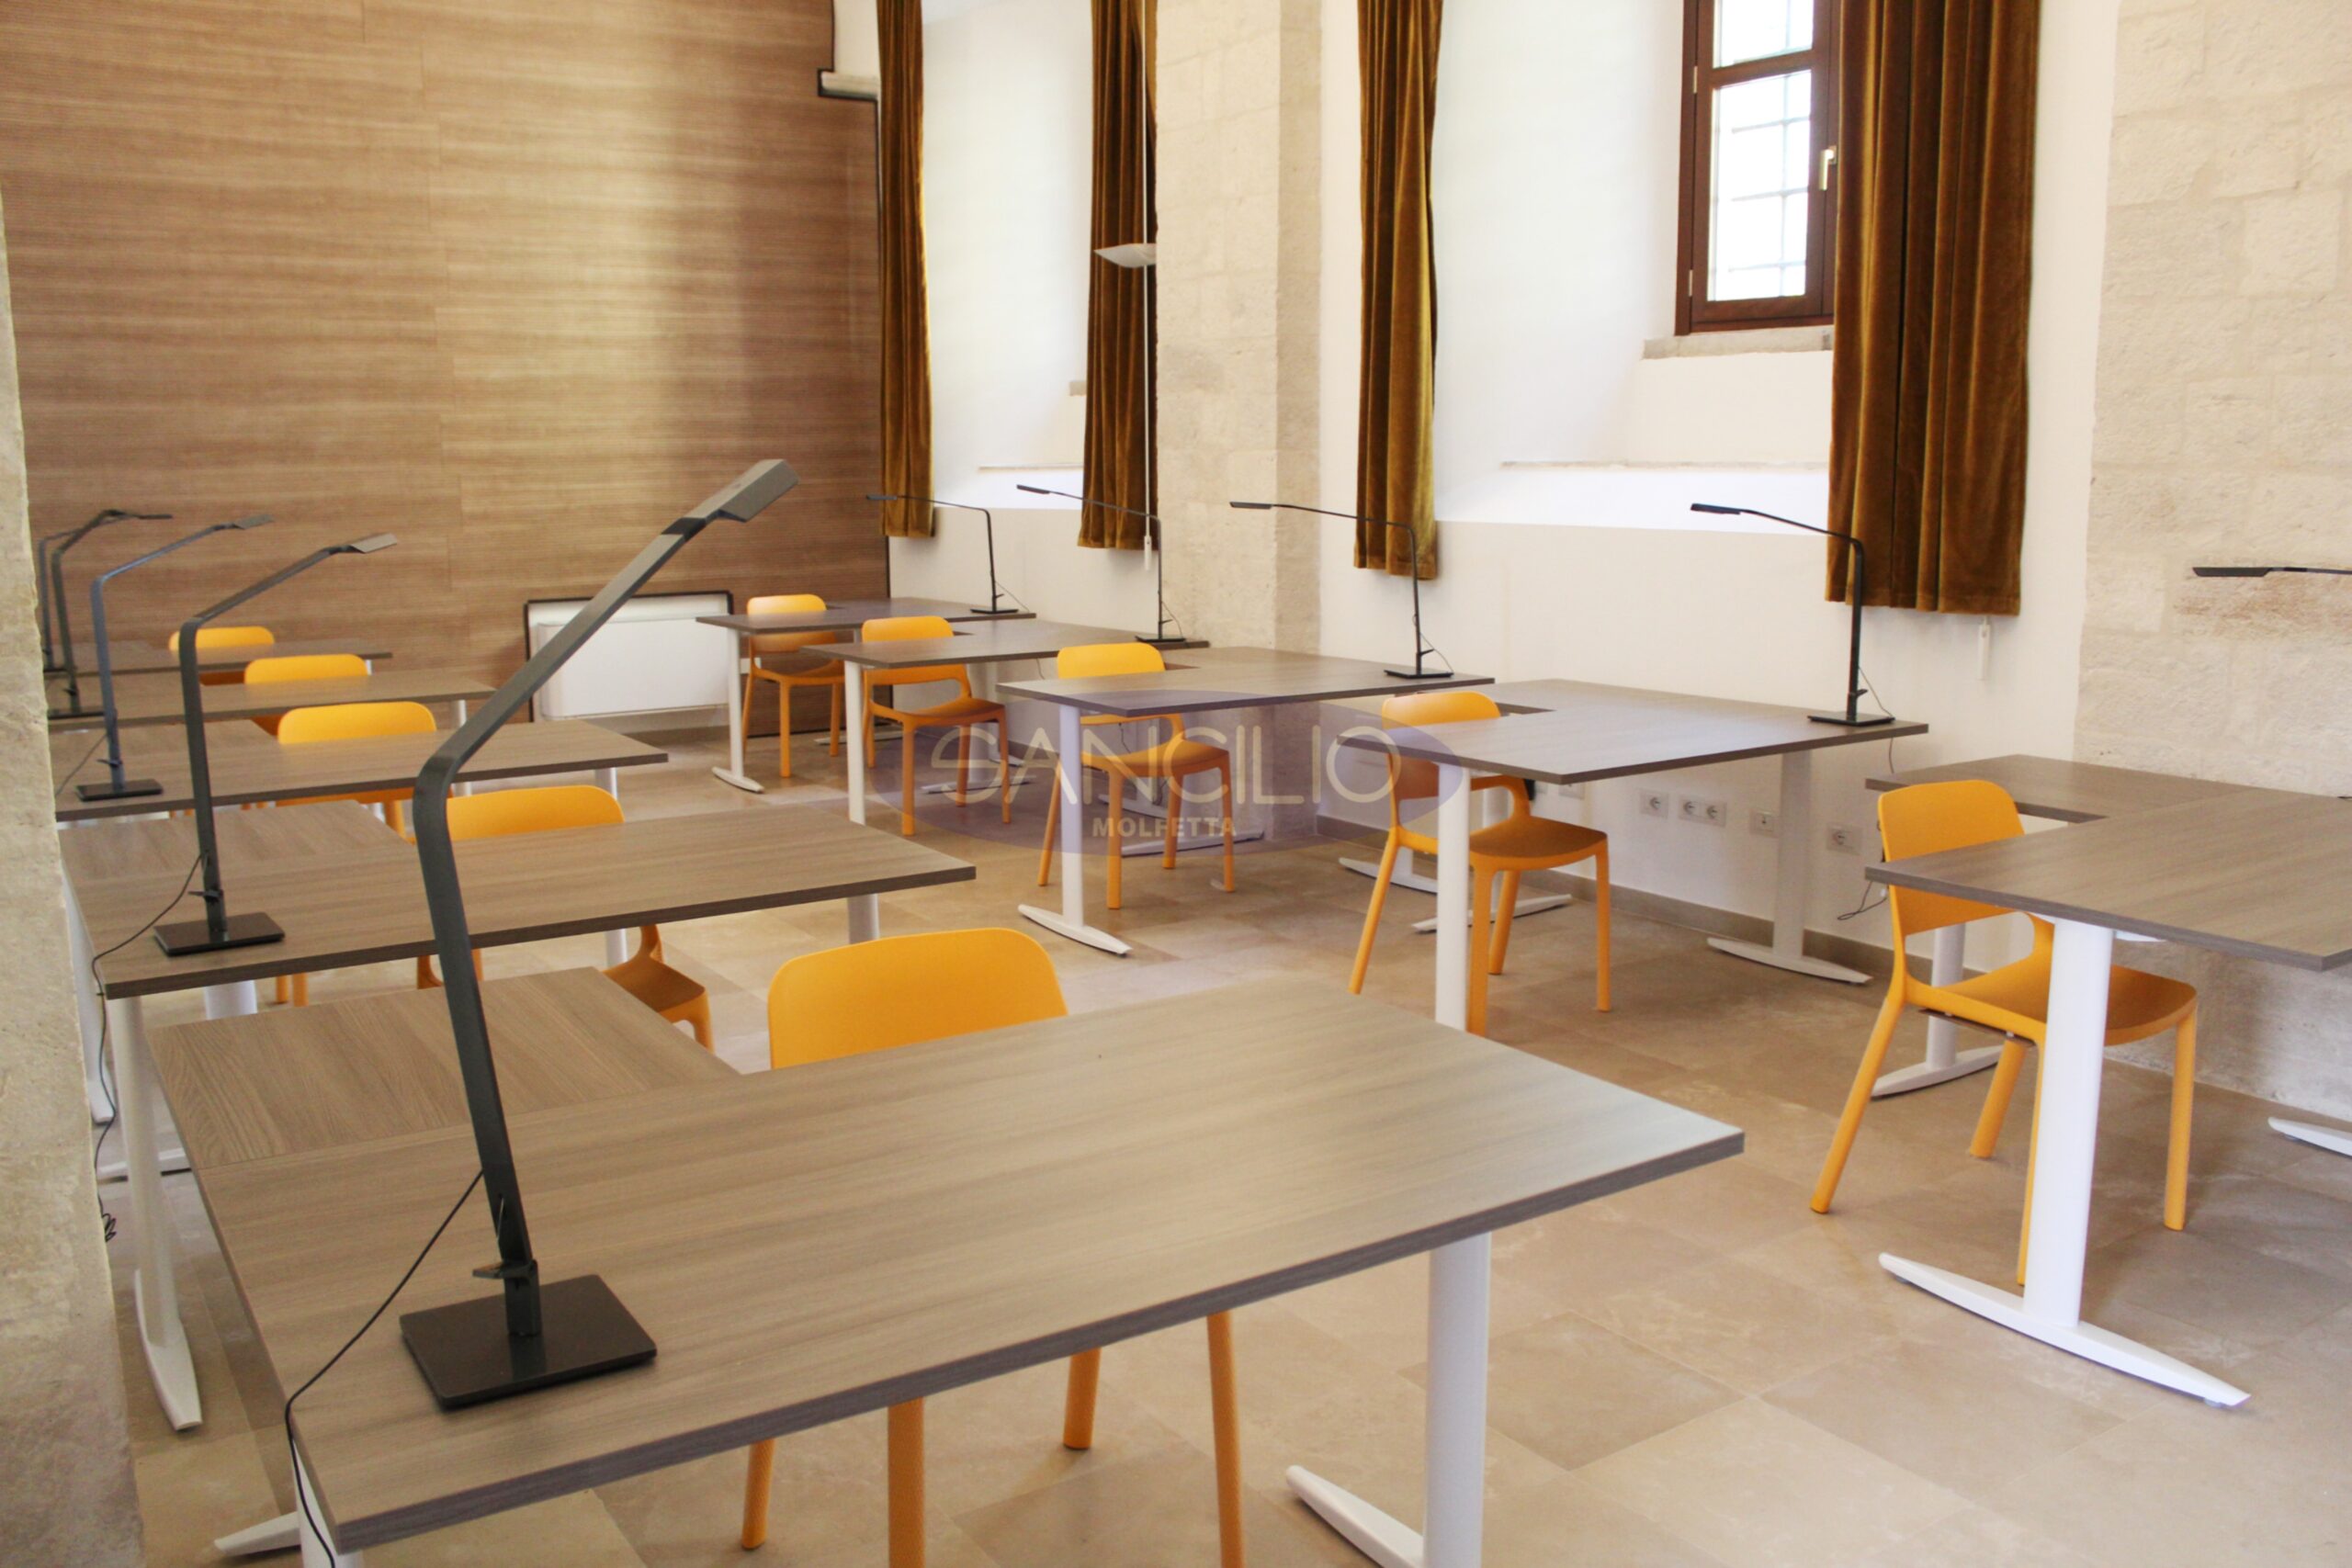 sancilio evotech molfetta - biblioteca comunale molfetta sala lettura sala conferenze meeting